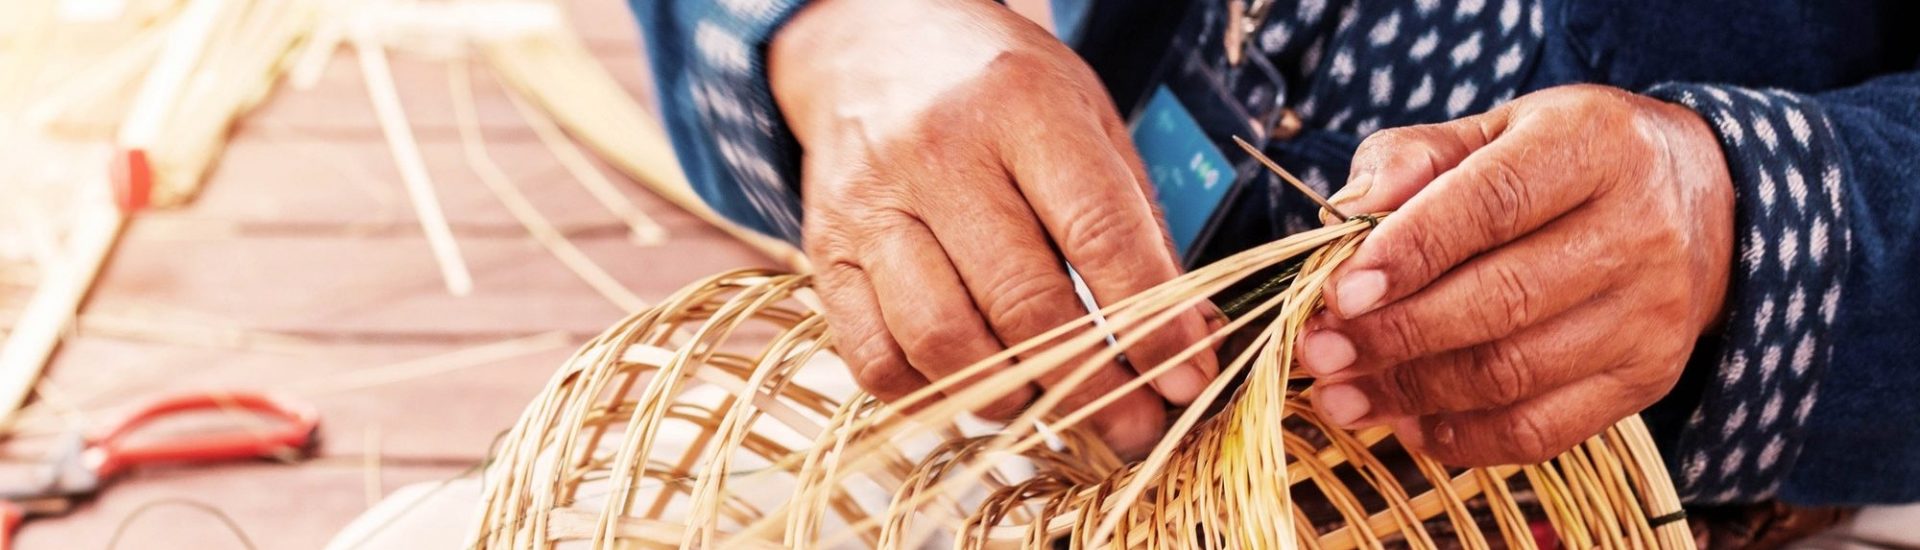 Hands weave bamboo baskets